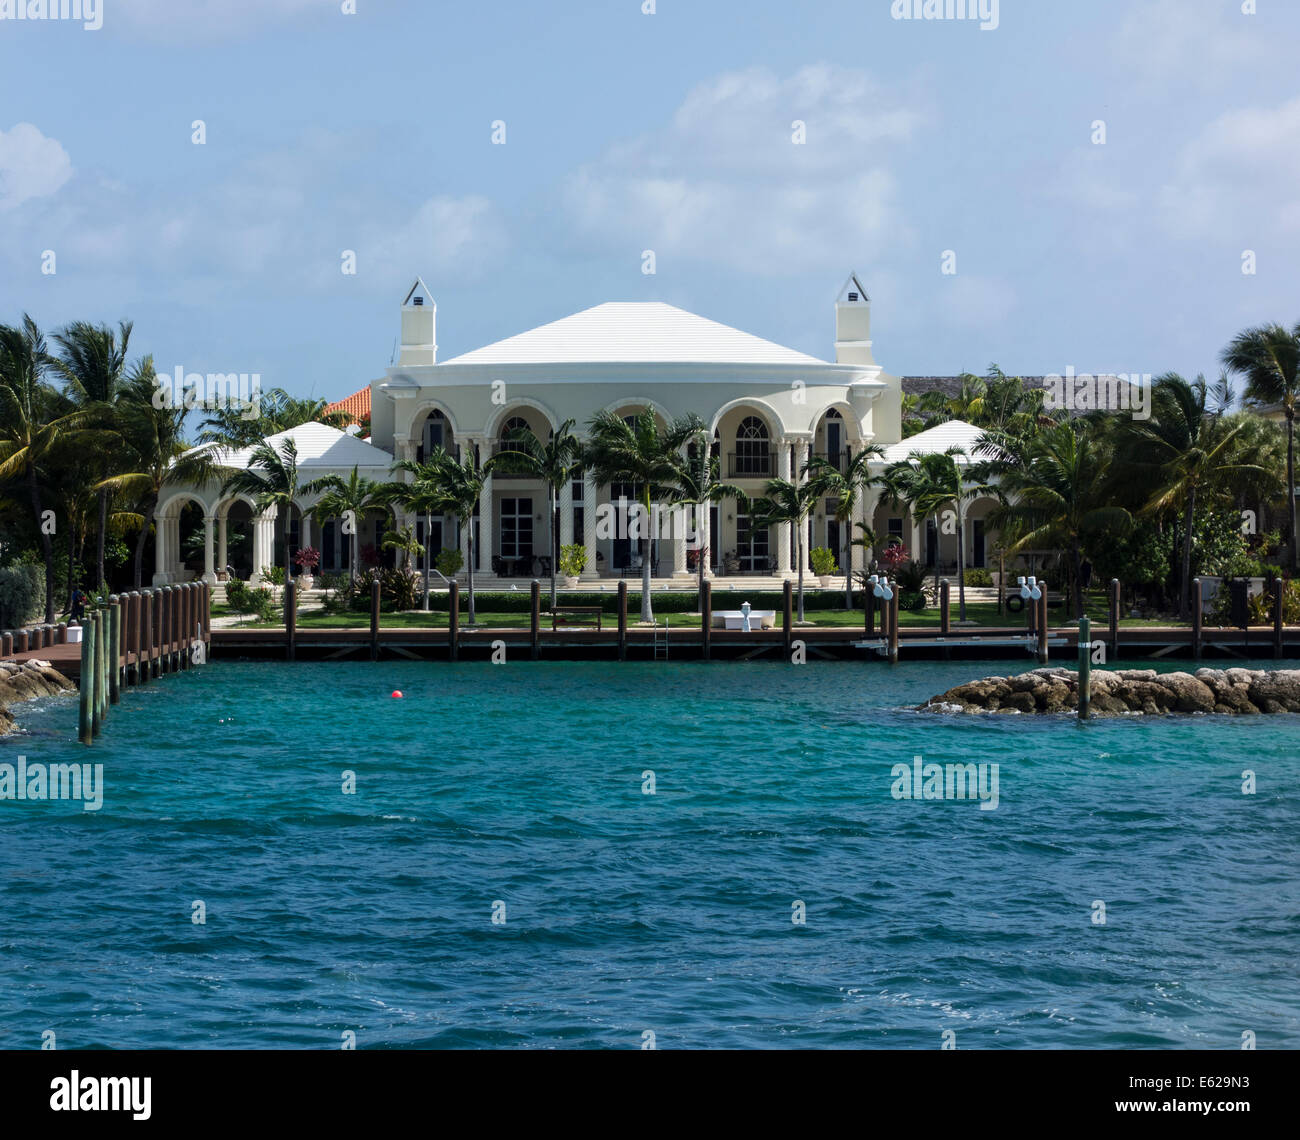 house of Oprah Winfrey, Paradise Island, the Bahamas Stock Photo